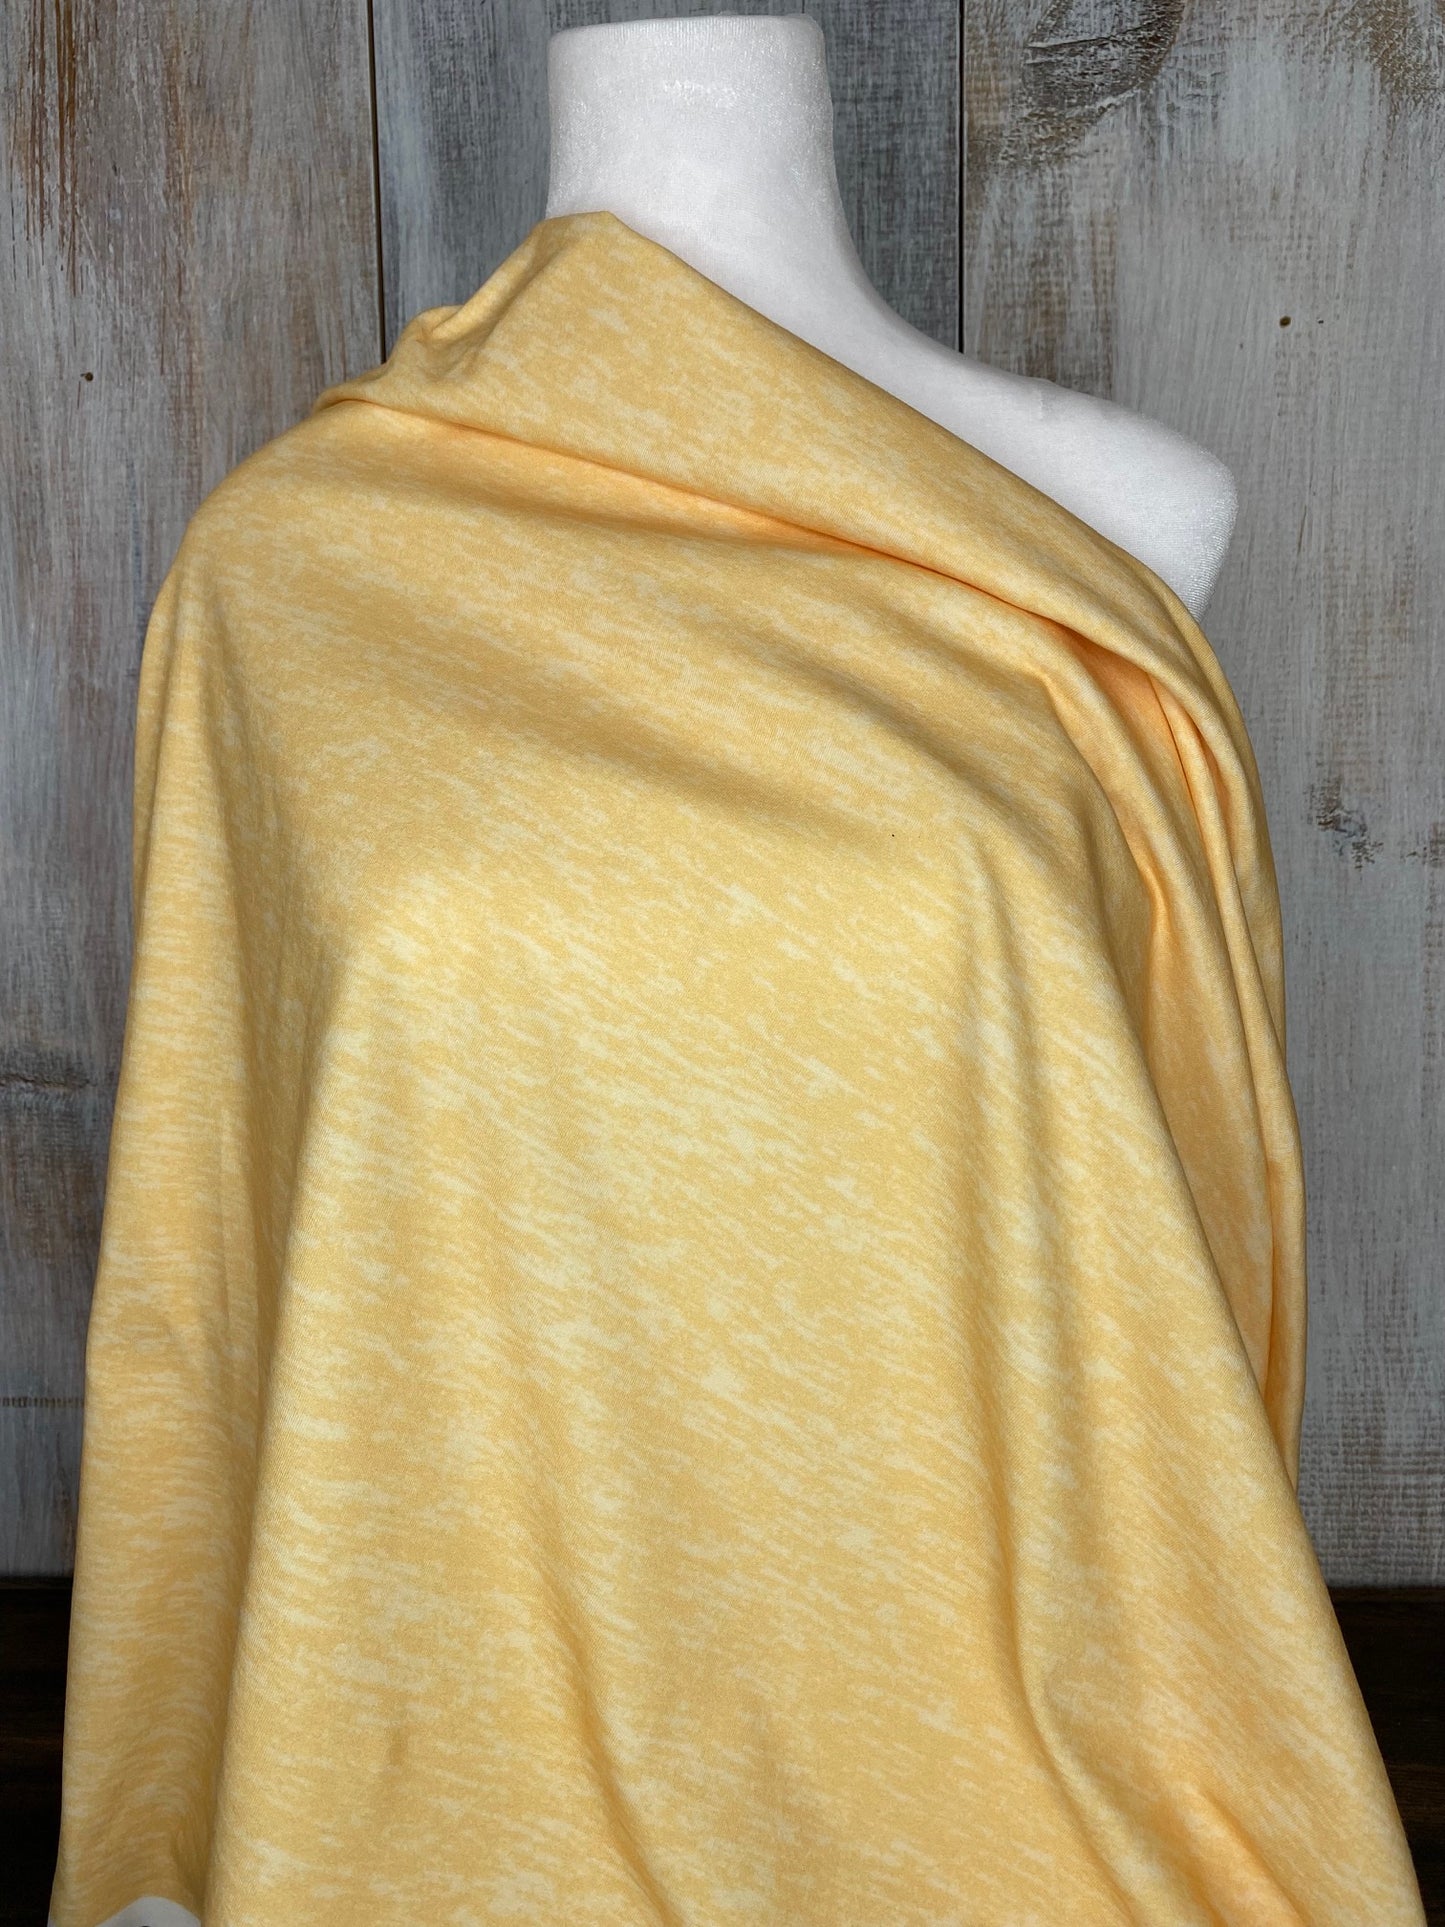 Yellow Heather Fabric - WayMaker Fabrics